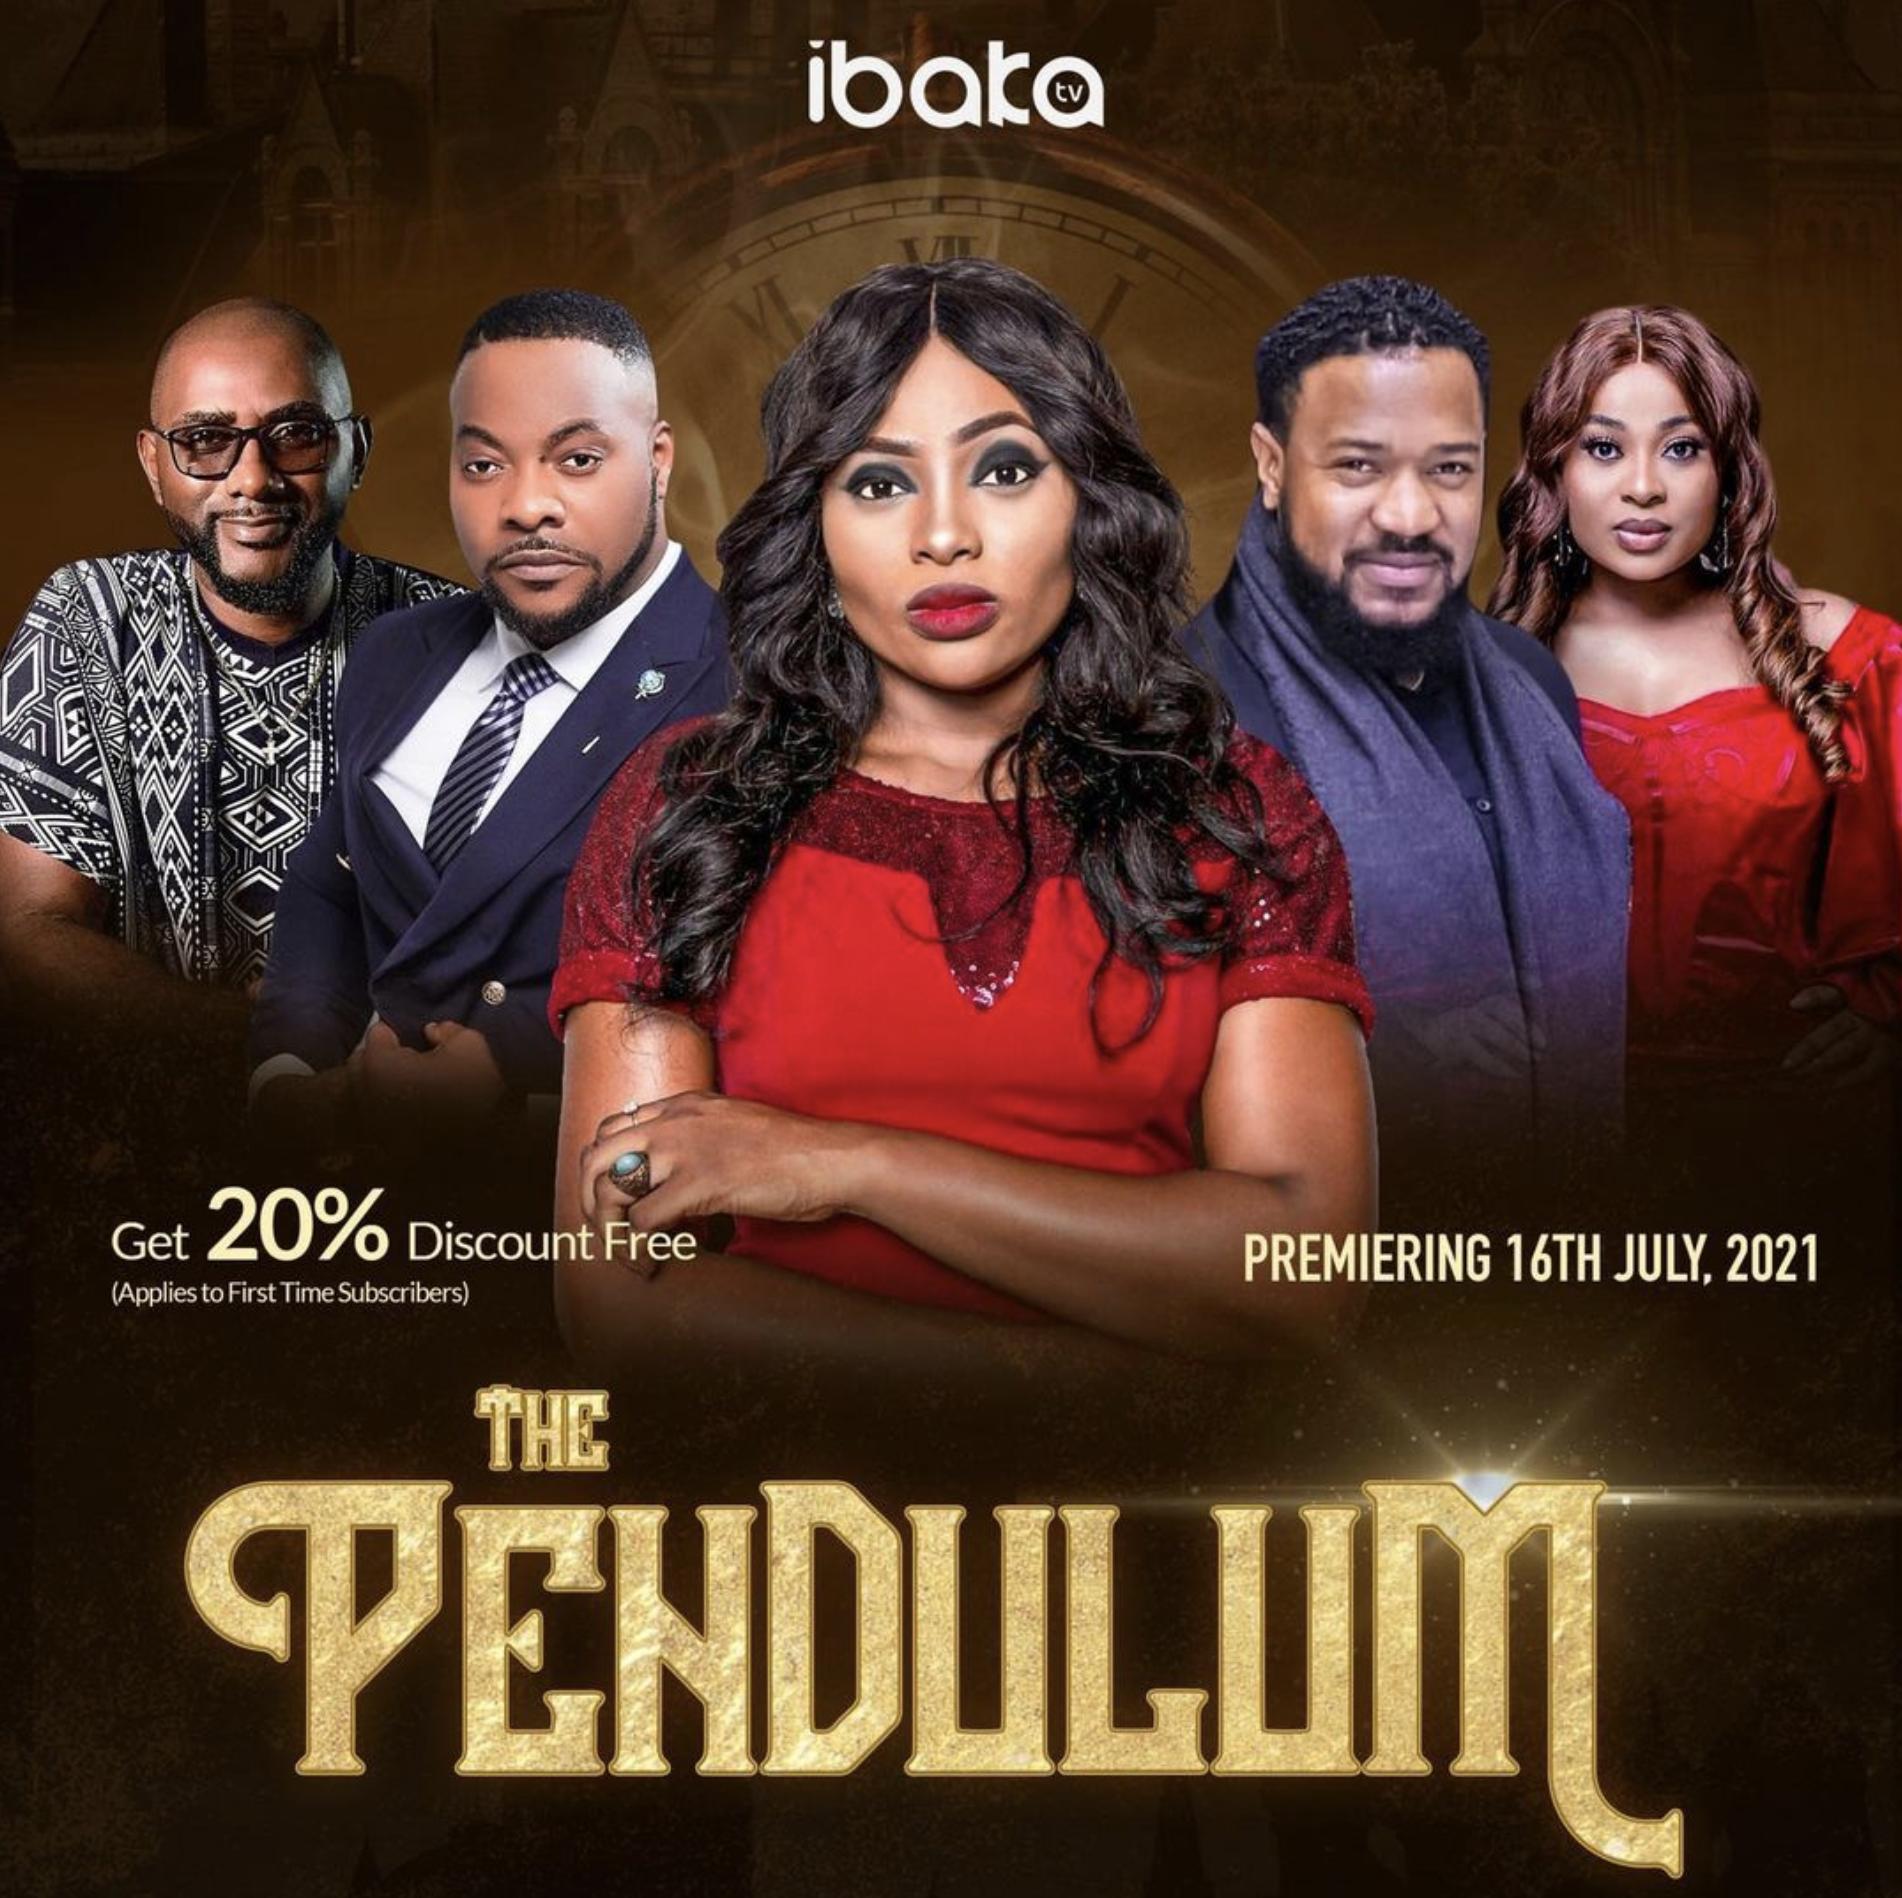 The Pendulum 2021 Movie Poster